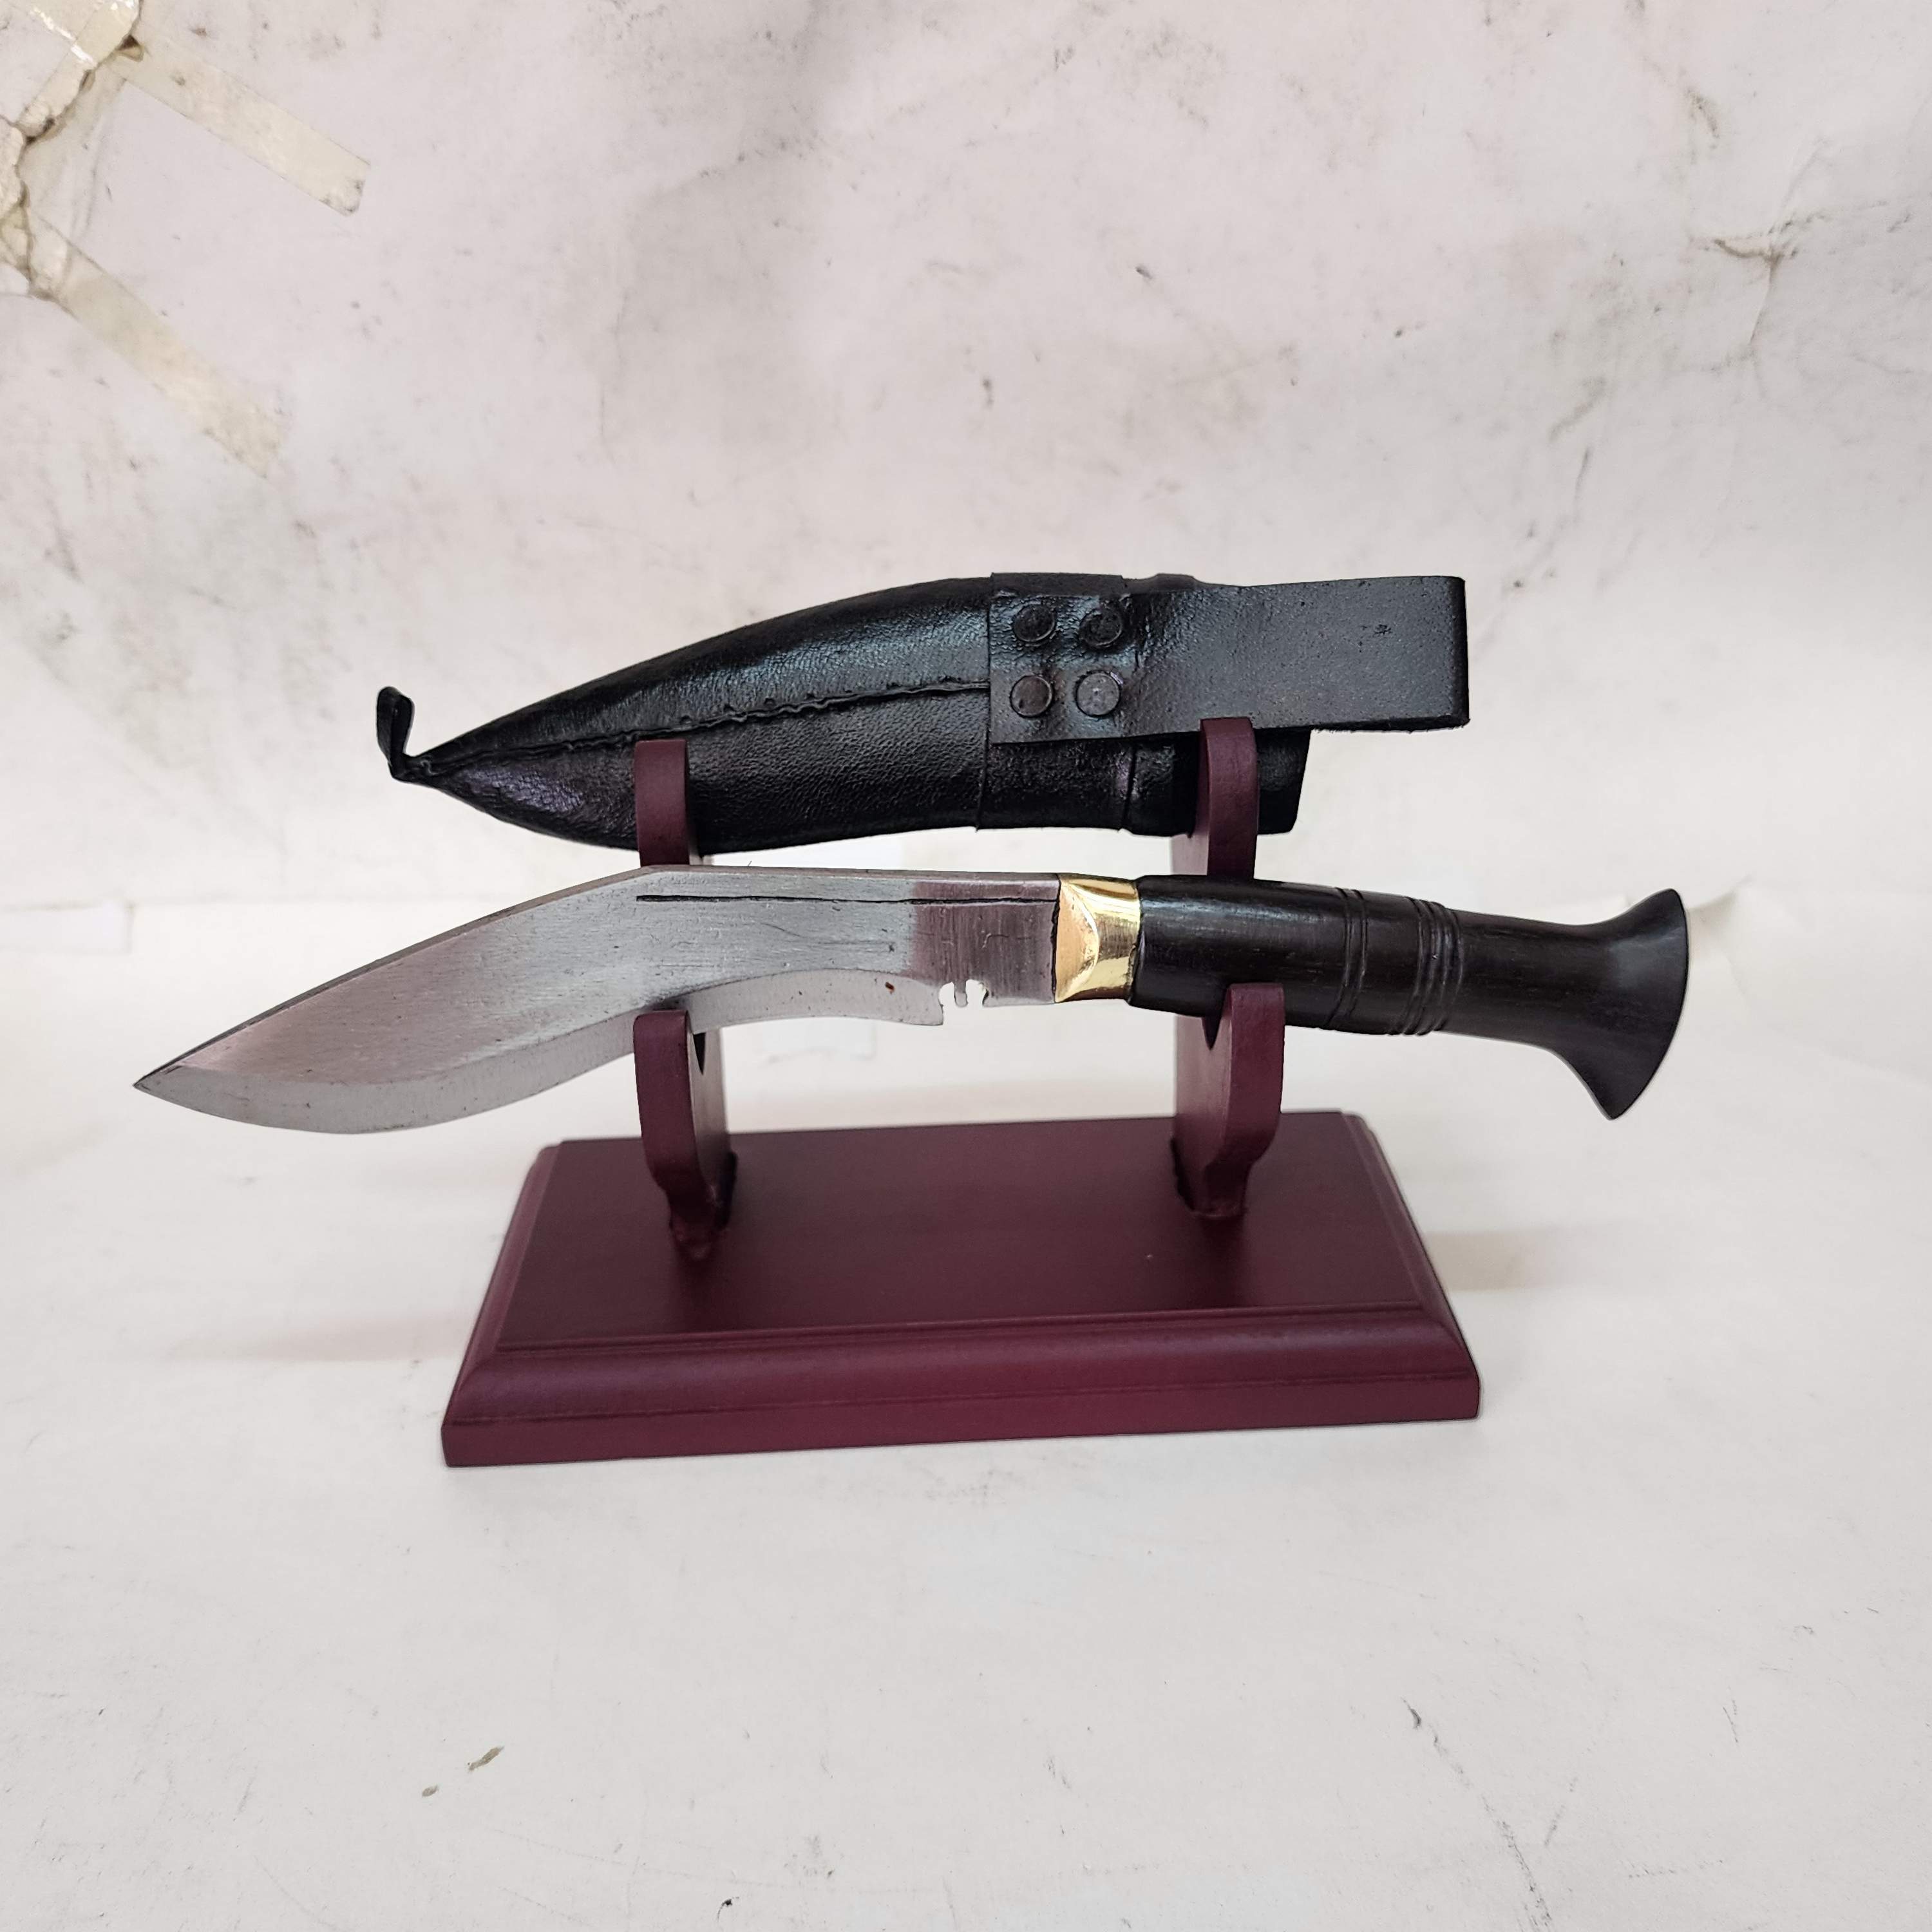 5 Inch, biltong Khukuri, Gurkha Knife With Leather Cover And Stand, Nepali Machete